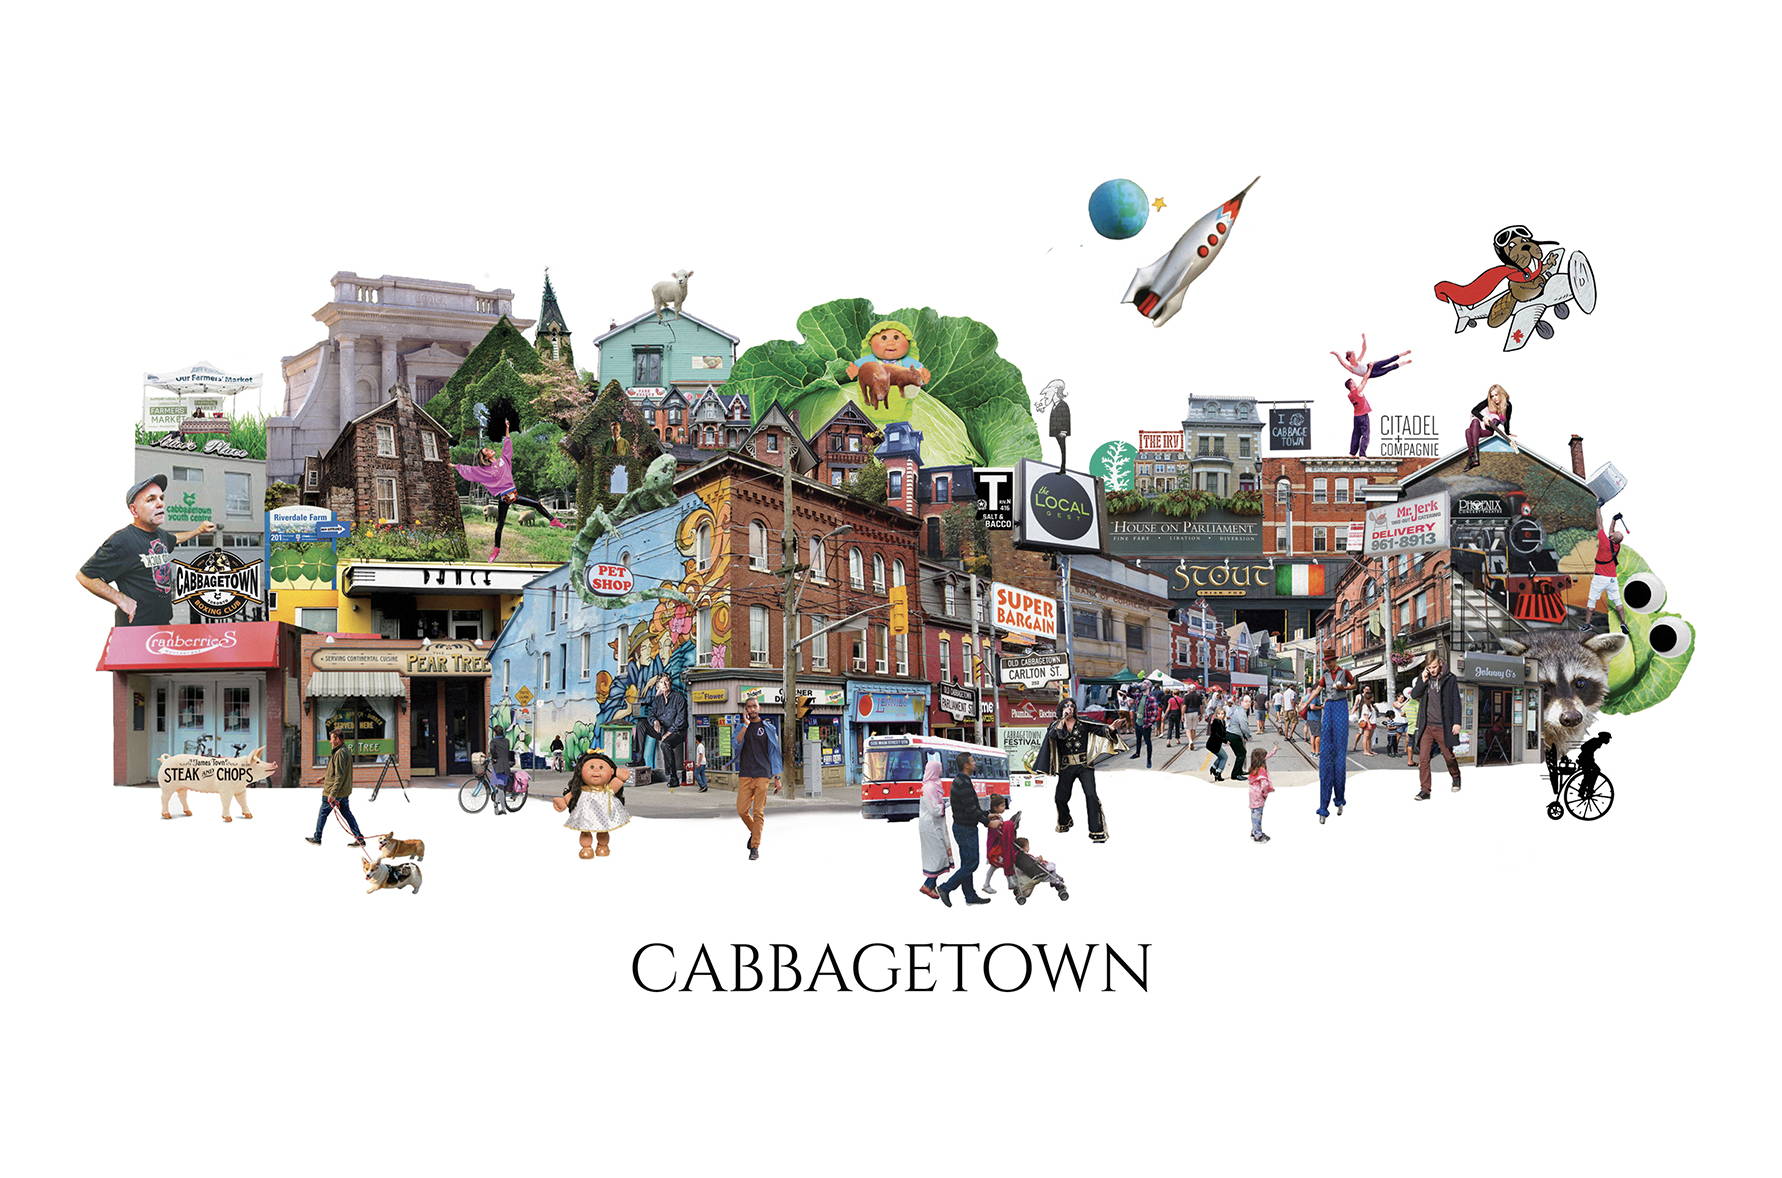 A digital collage of Toronto's Victorian Cabbagetown neighbourhood